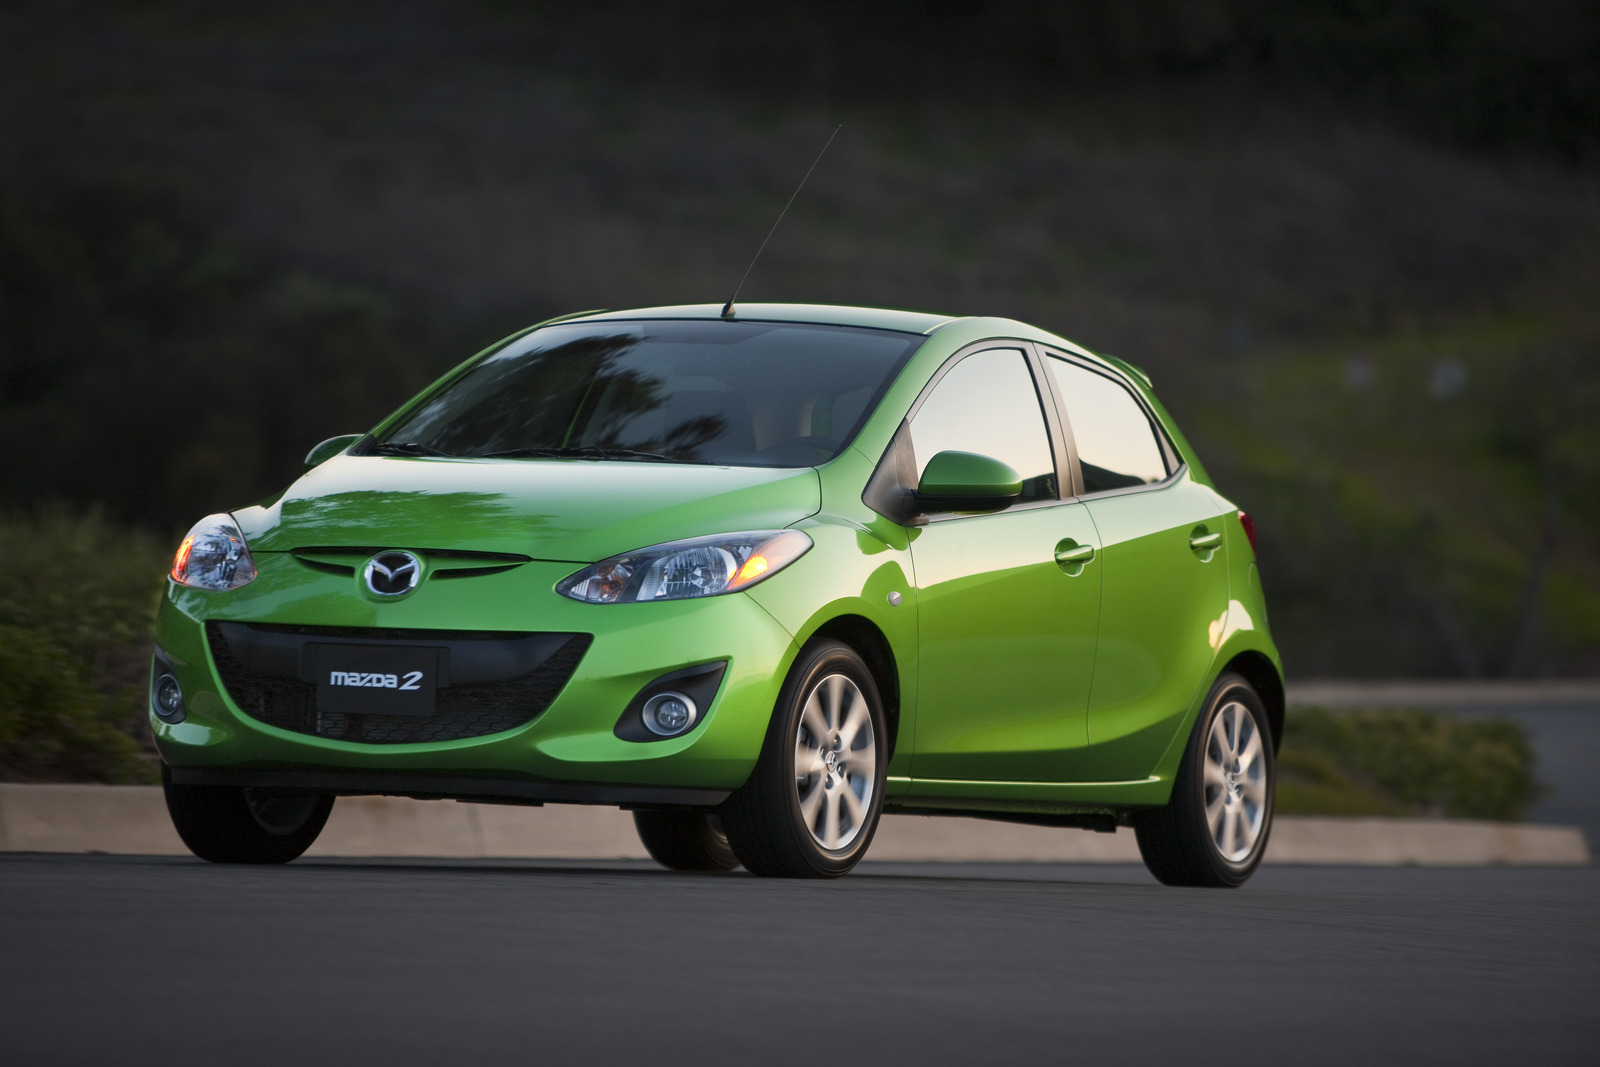 Mazda2 Electric Car Leasing Starts In Japan